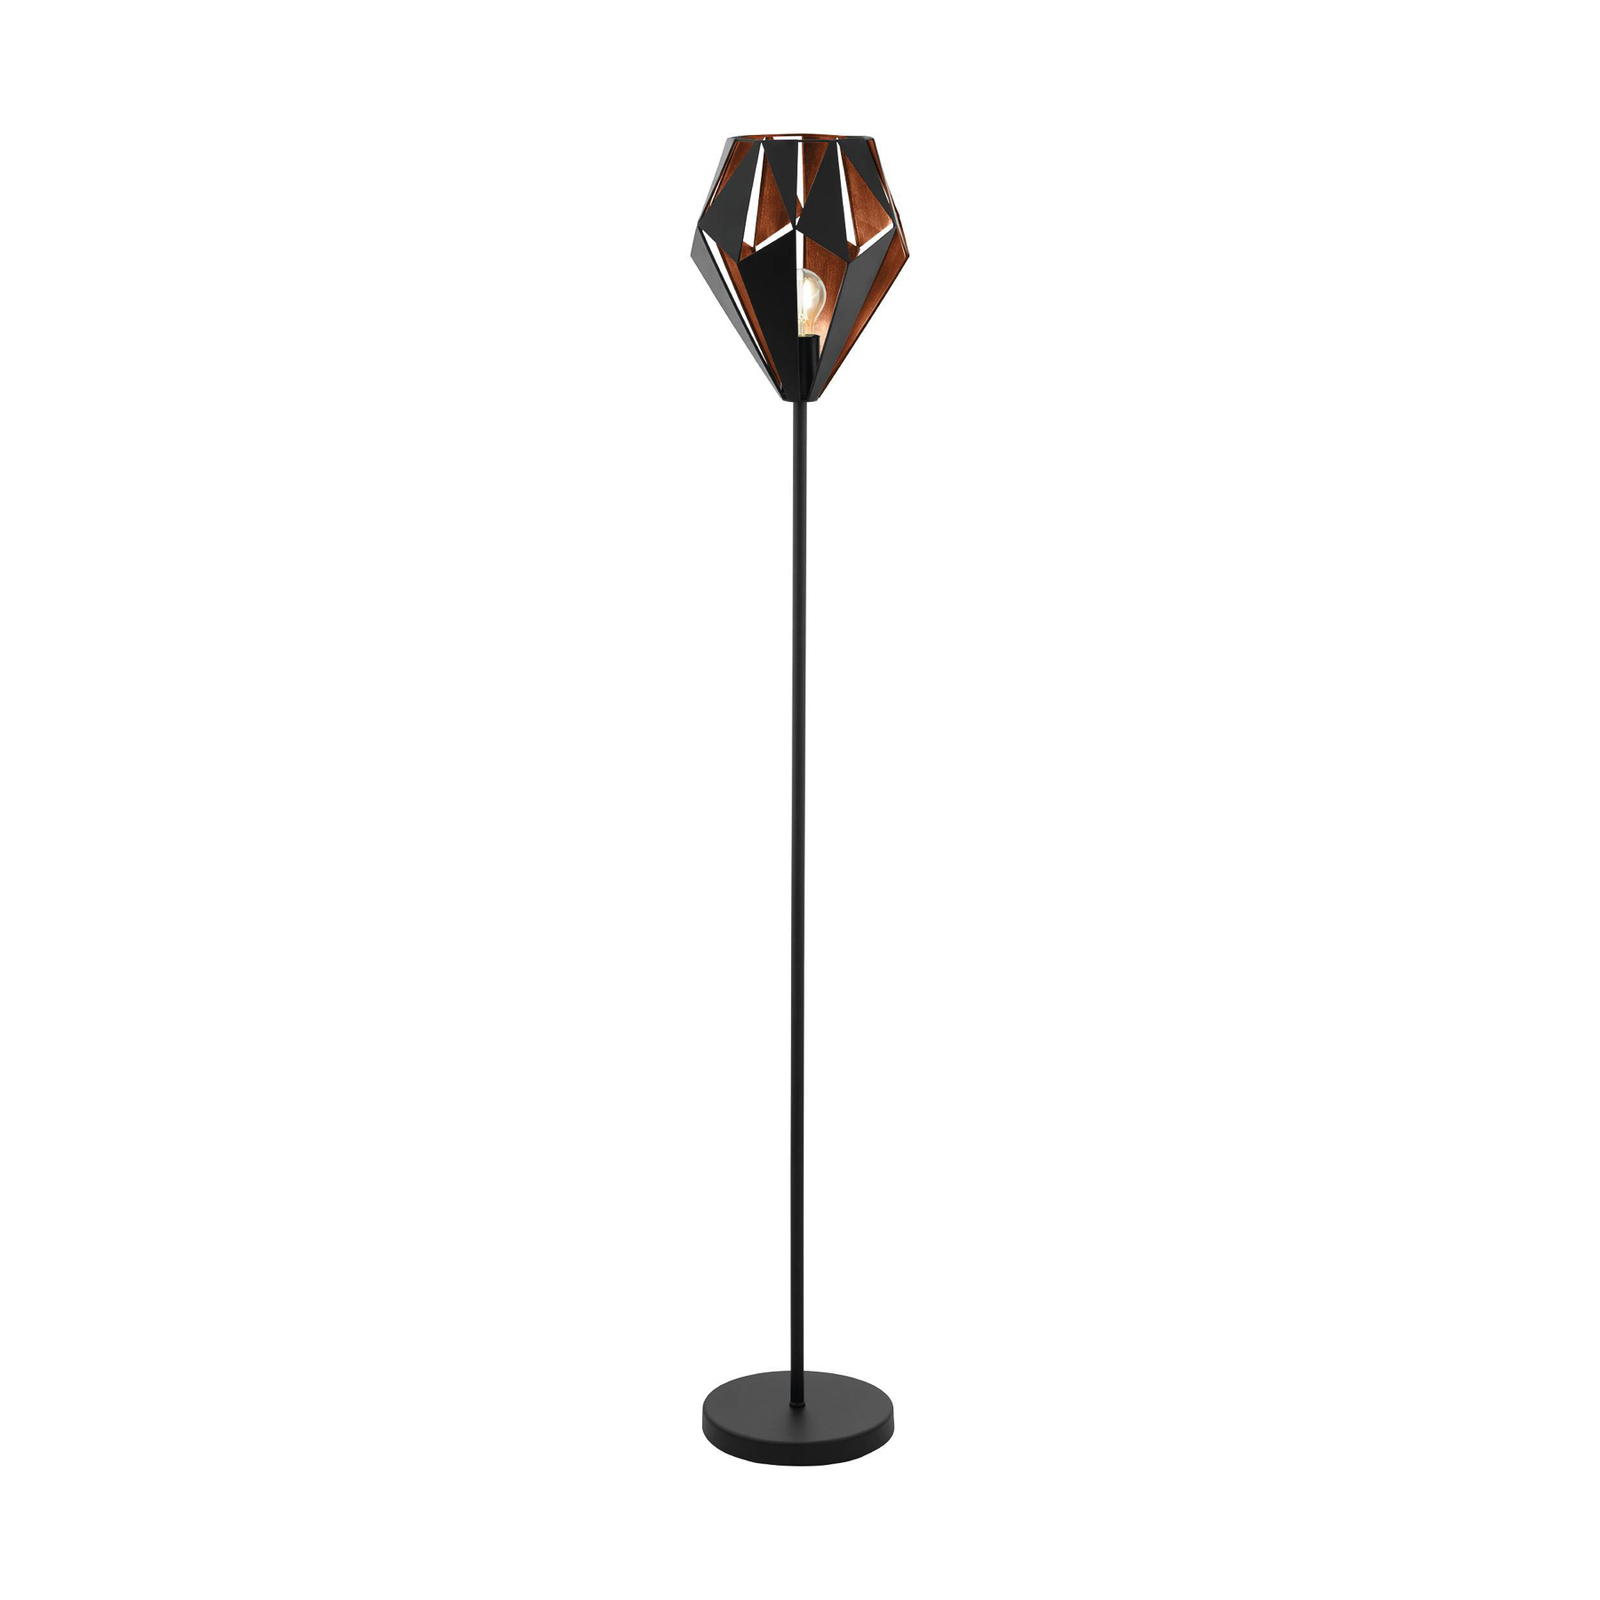 Carlton floor lamp made of steel, black/copper